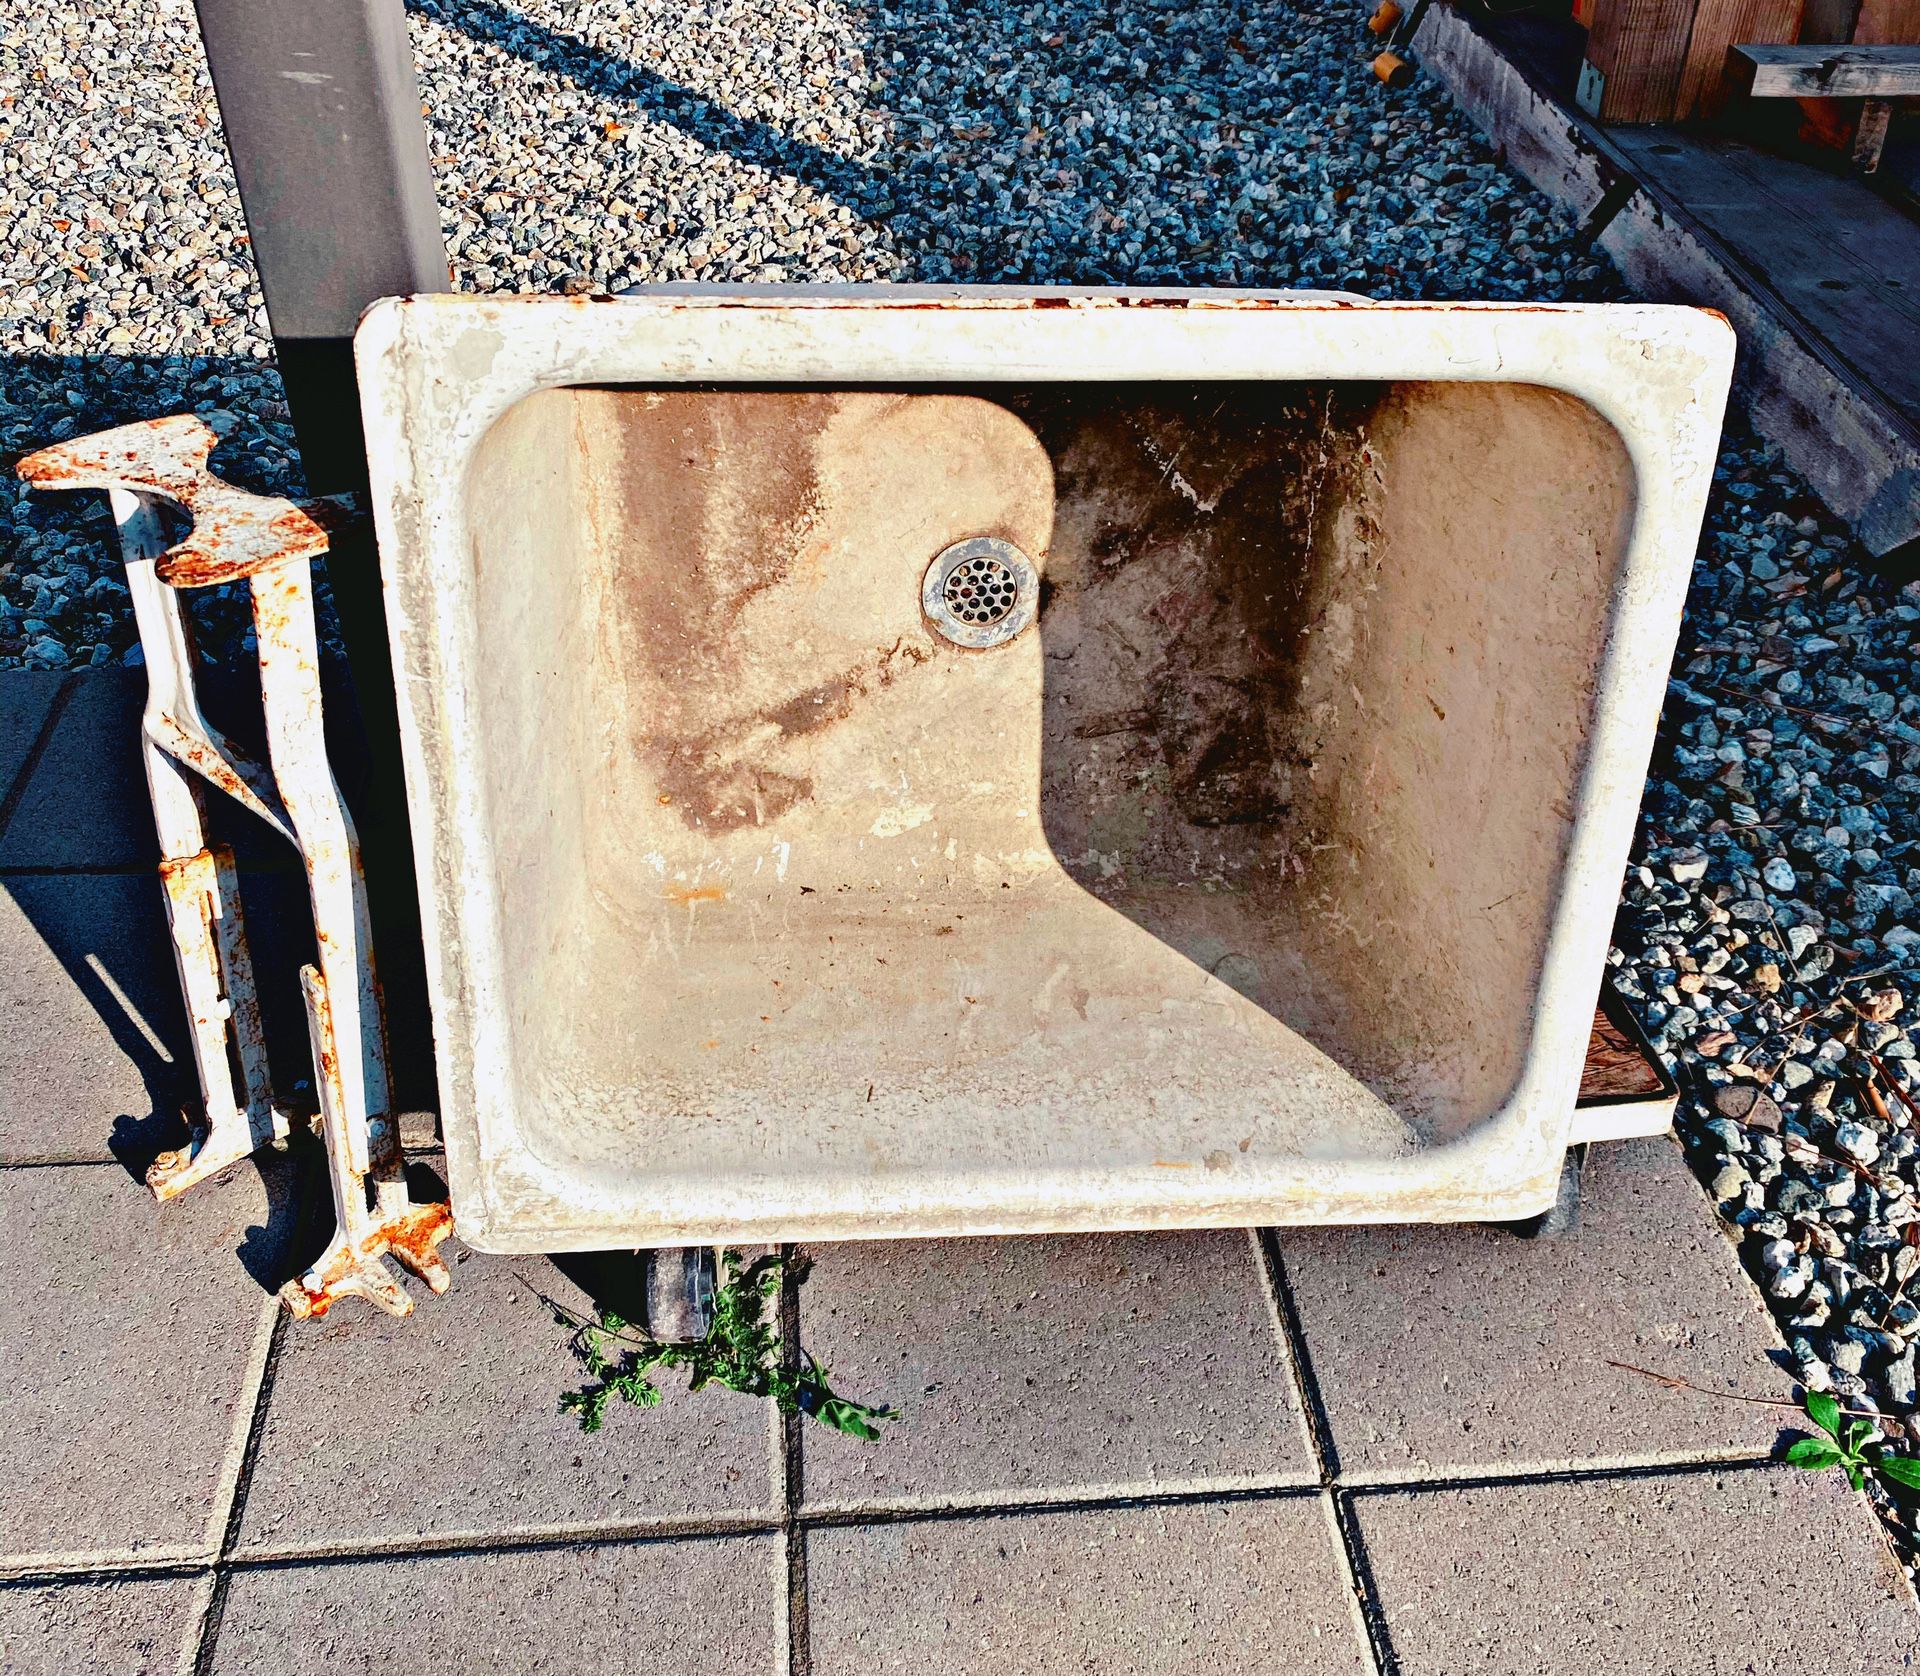 American standard utility sink!! (Vintage cast-iron)